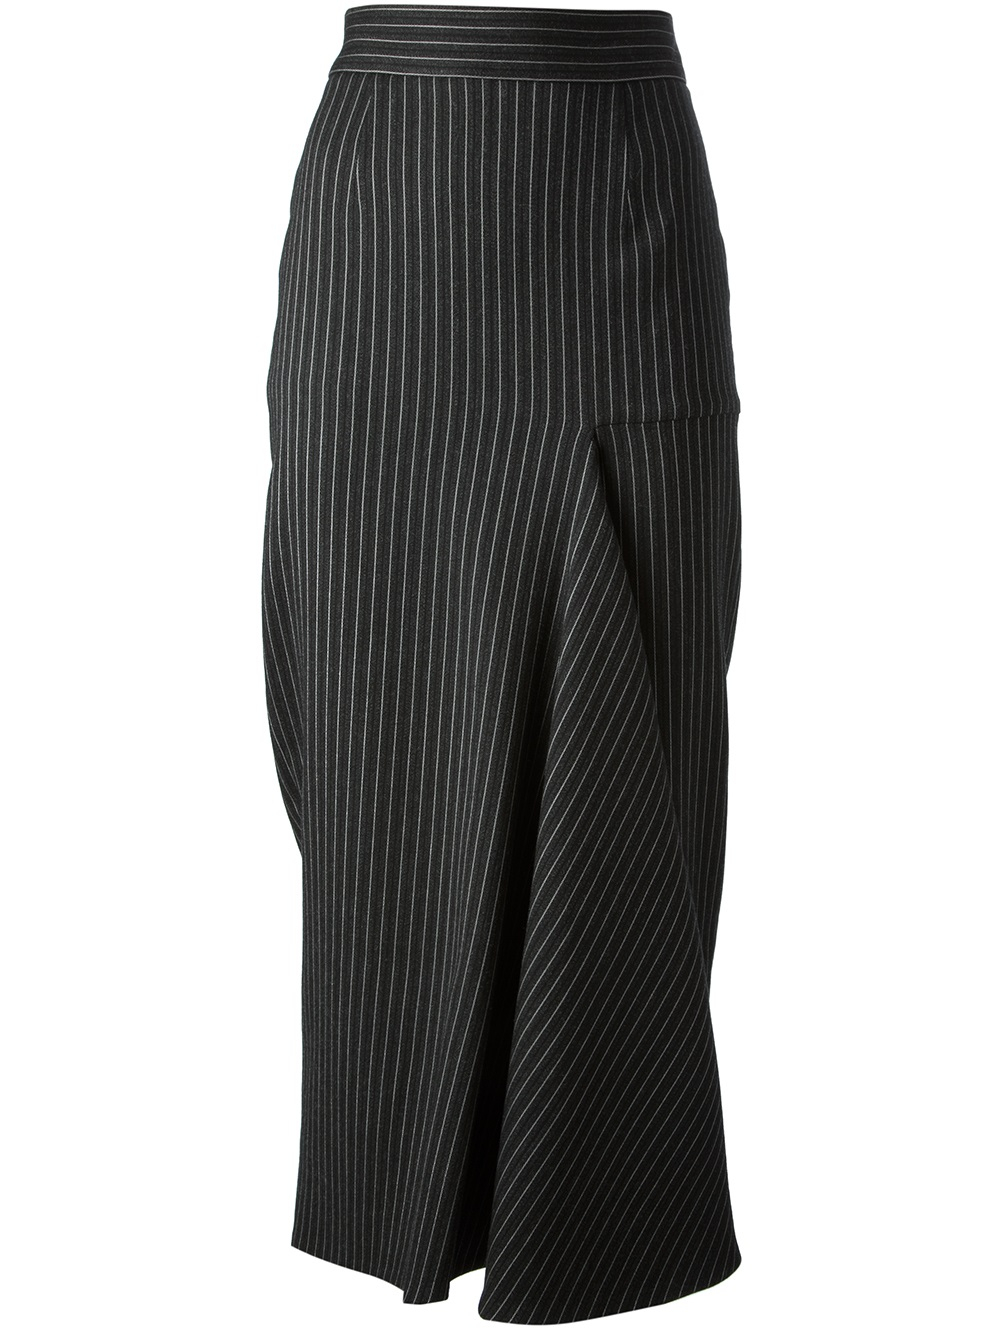 Grey Pinstripe Skirt 43